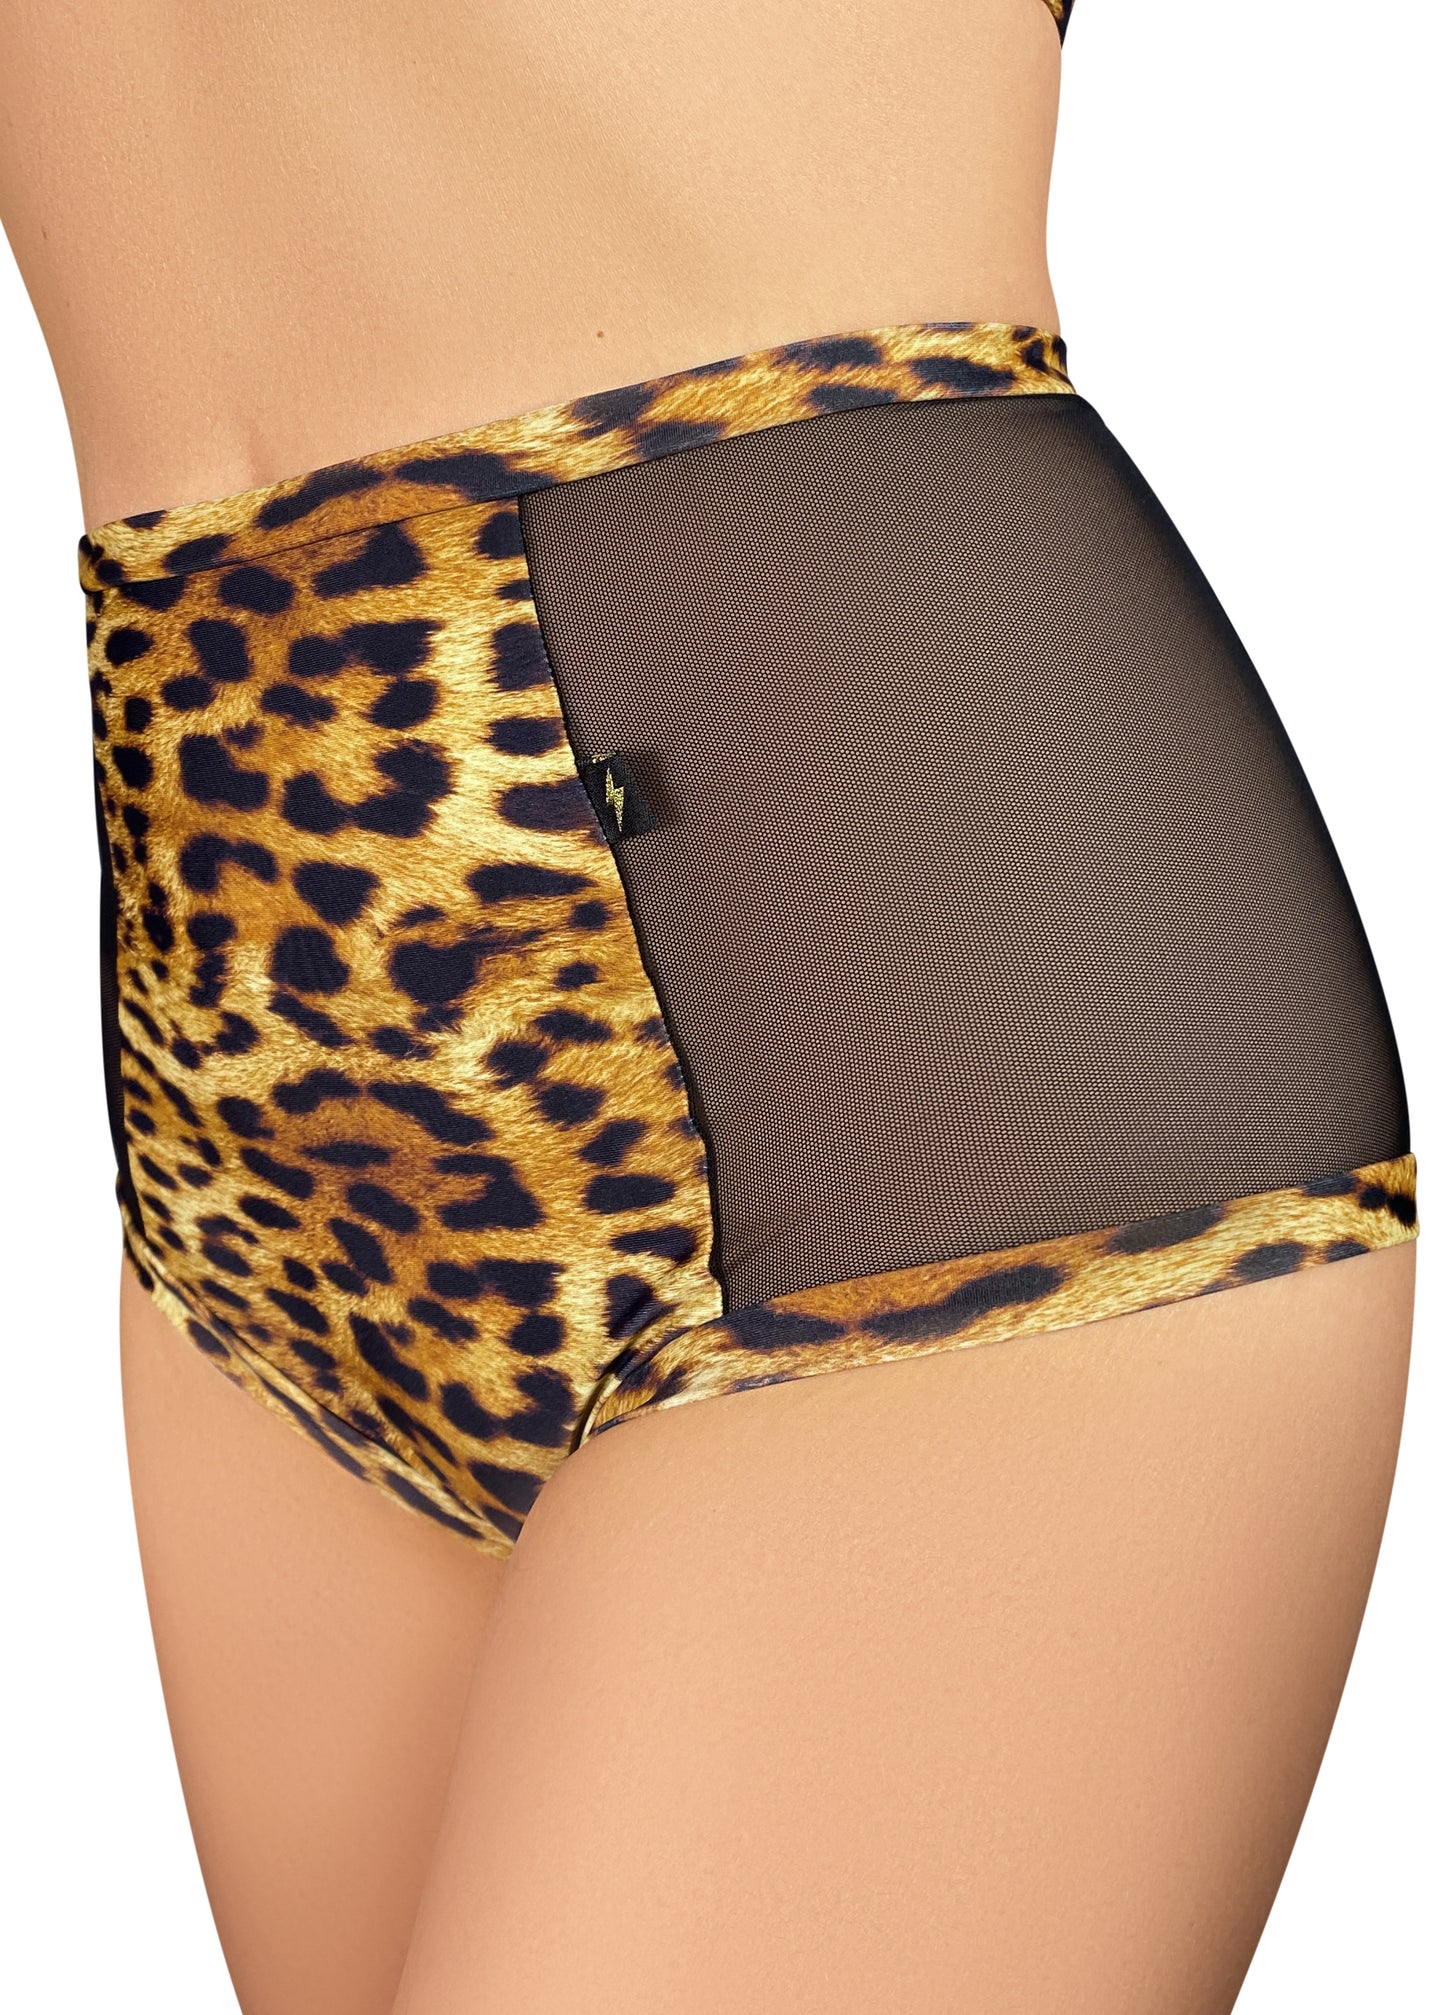 Anima Print Tan Leopard Scrunch Butt Leggings Nylon Spandex